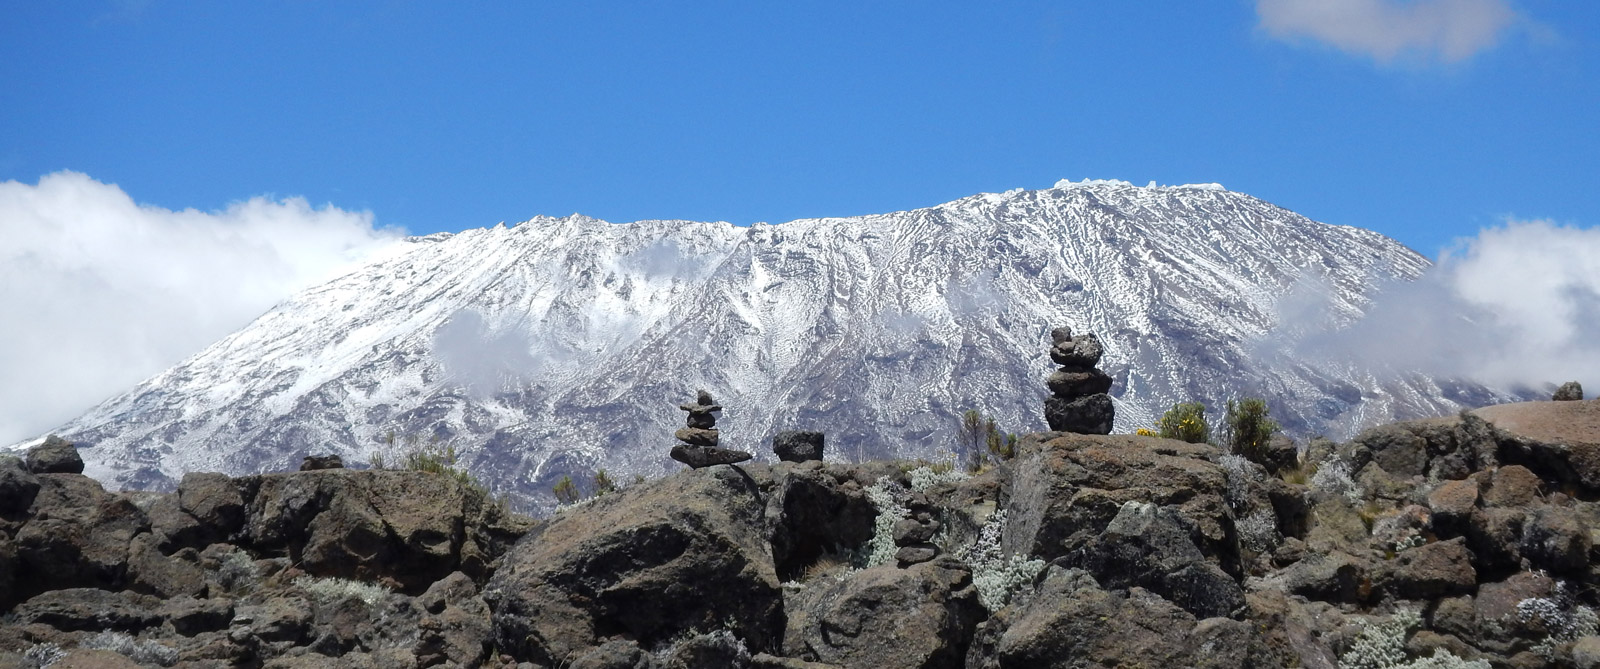 Rock cairns dwarfed by Mount Kilimanjaro in the distance © Shelley Hyne